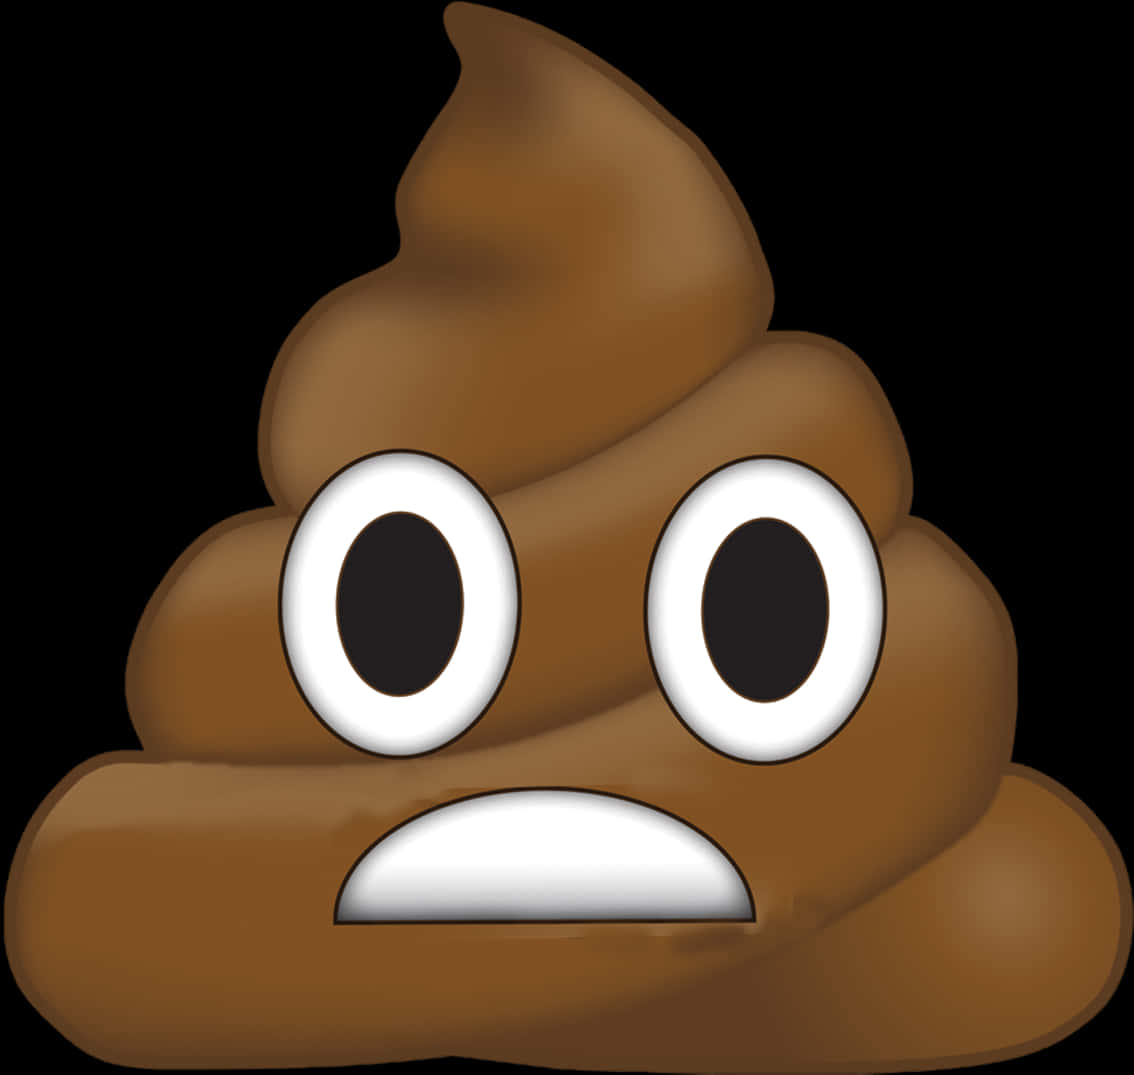 Poop Emoji Graphic PNG image